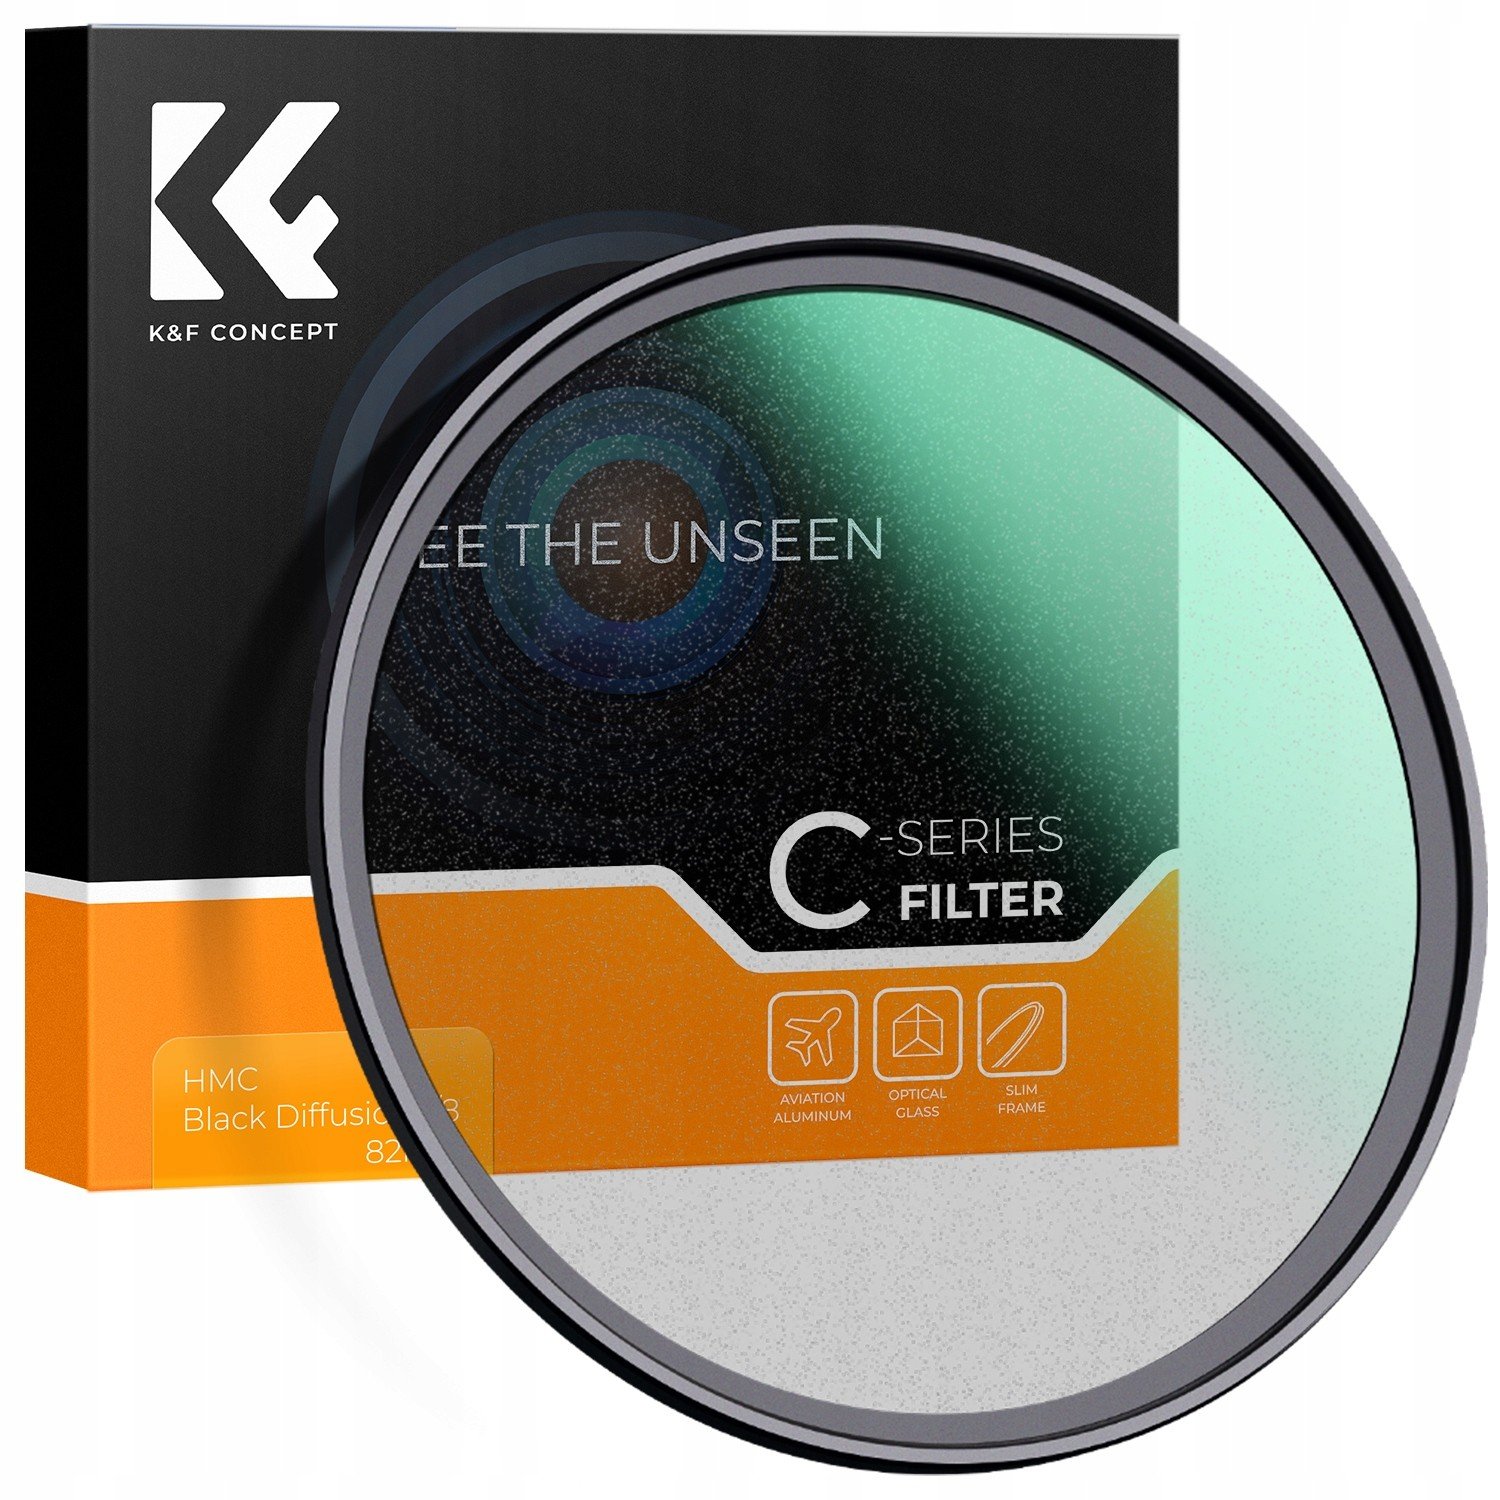 Difuzní filtr Black Mist 1/8 52mm Nano-C K&f